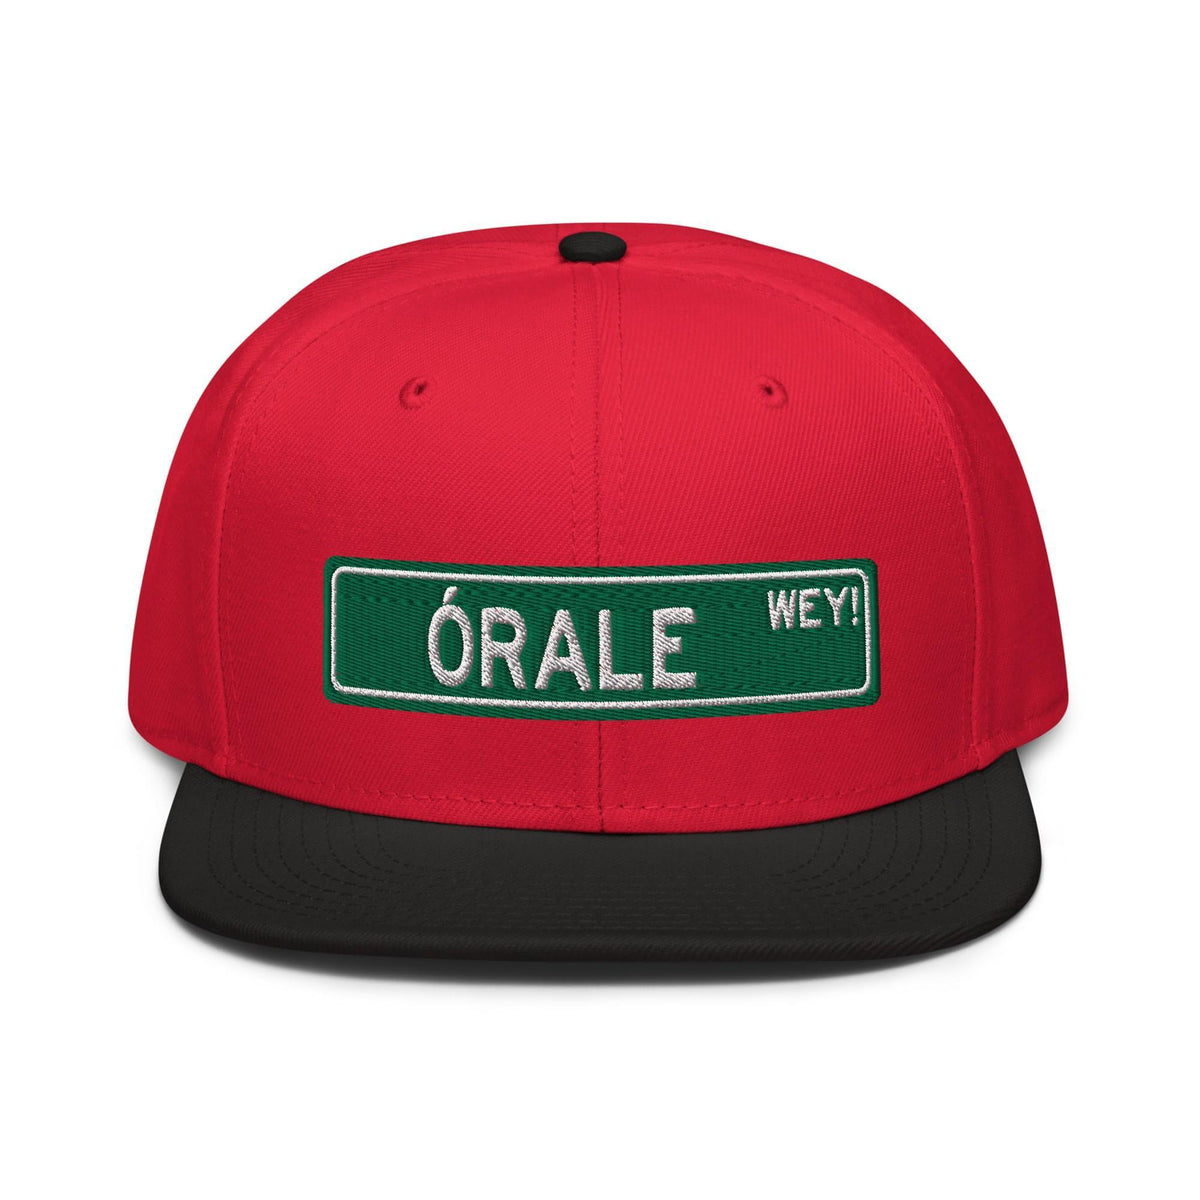 Órale Wey Snapback Hat